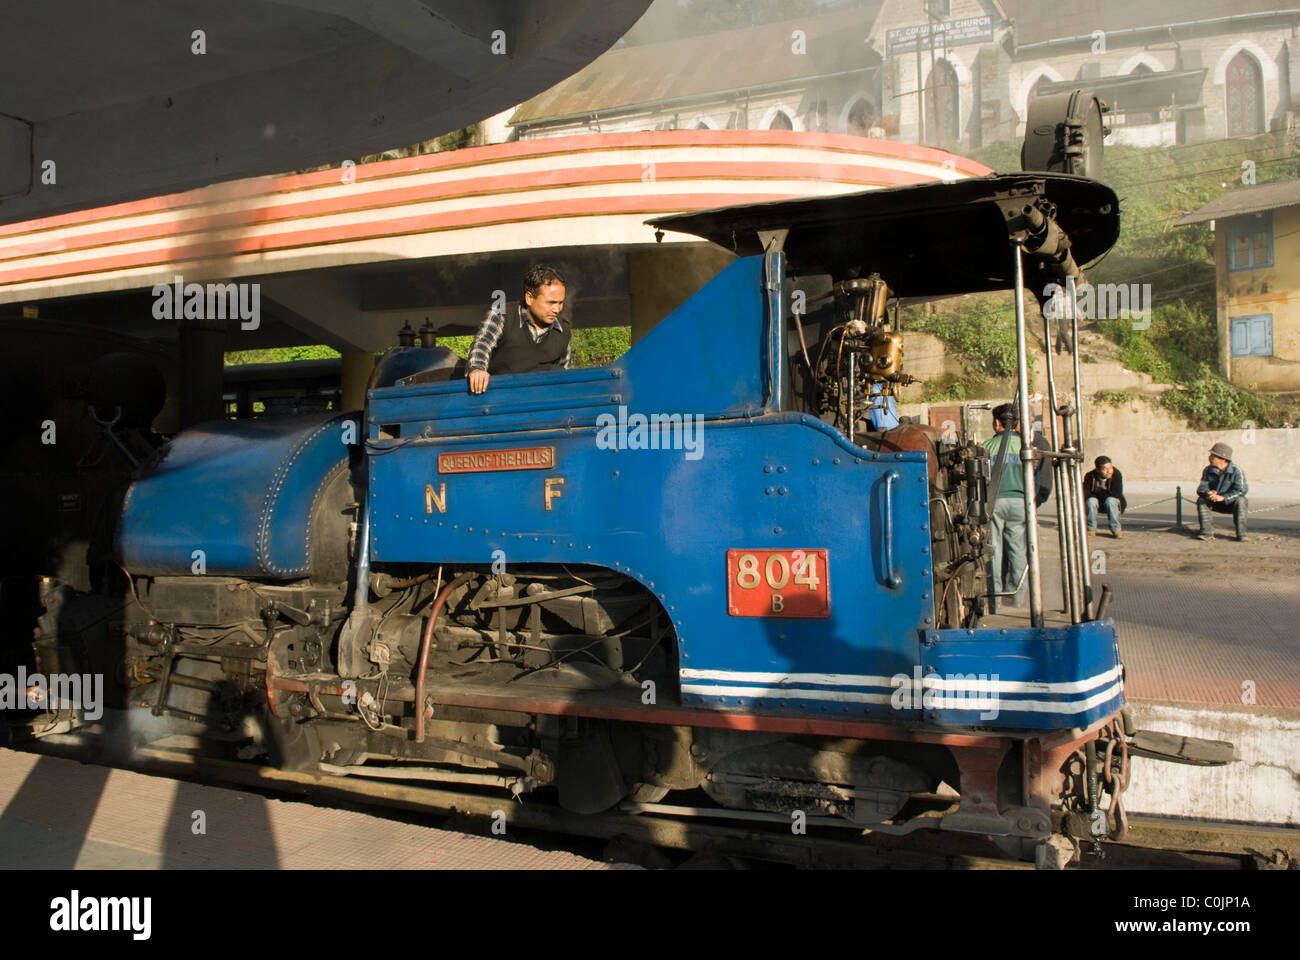 The Darjeeling Himalayan Railway, Darjeeling, West Bengal, India. Stock Photo